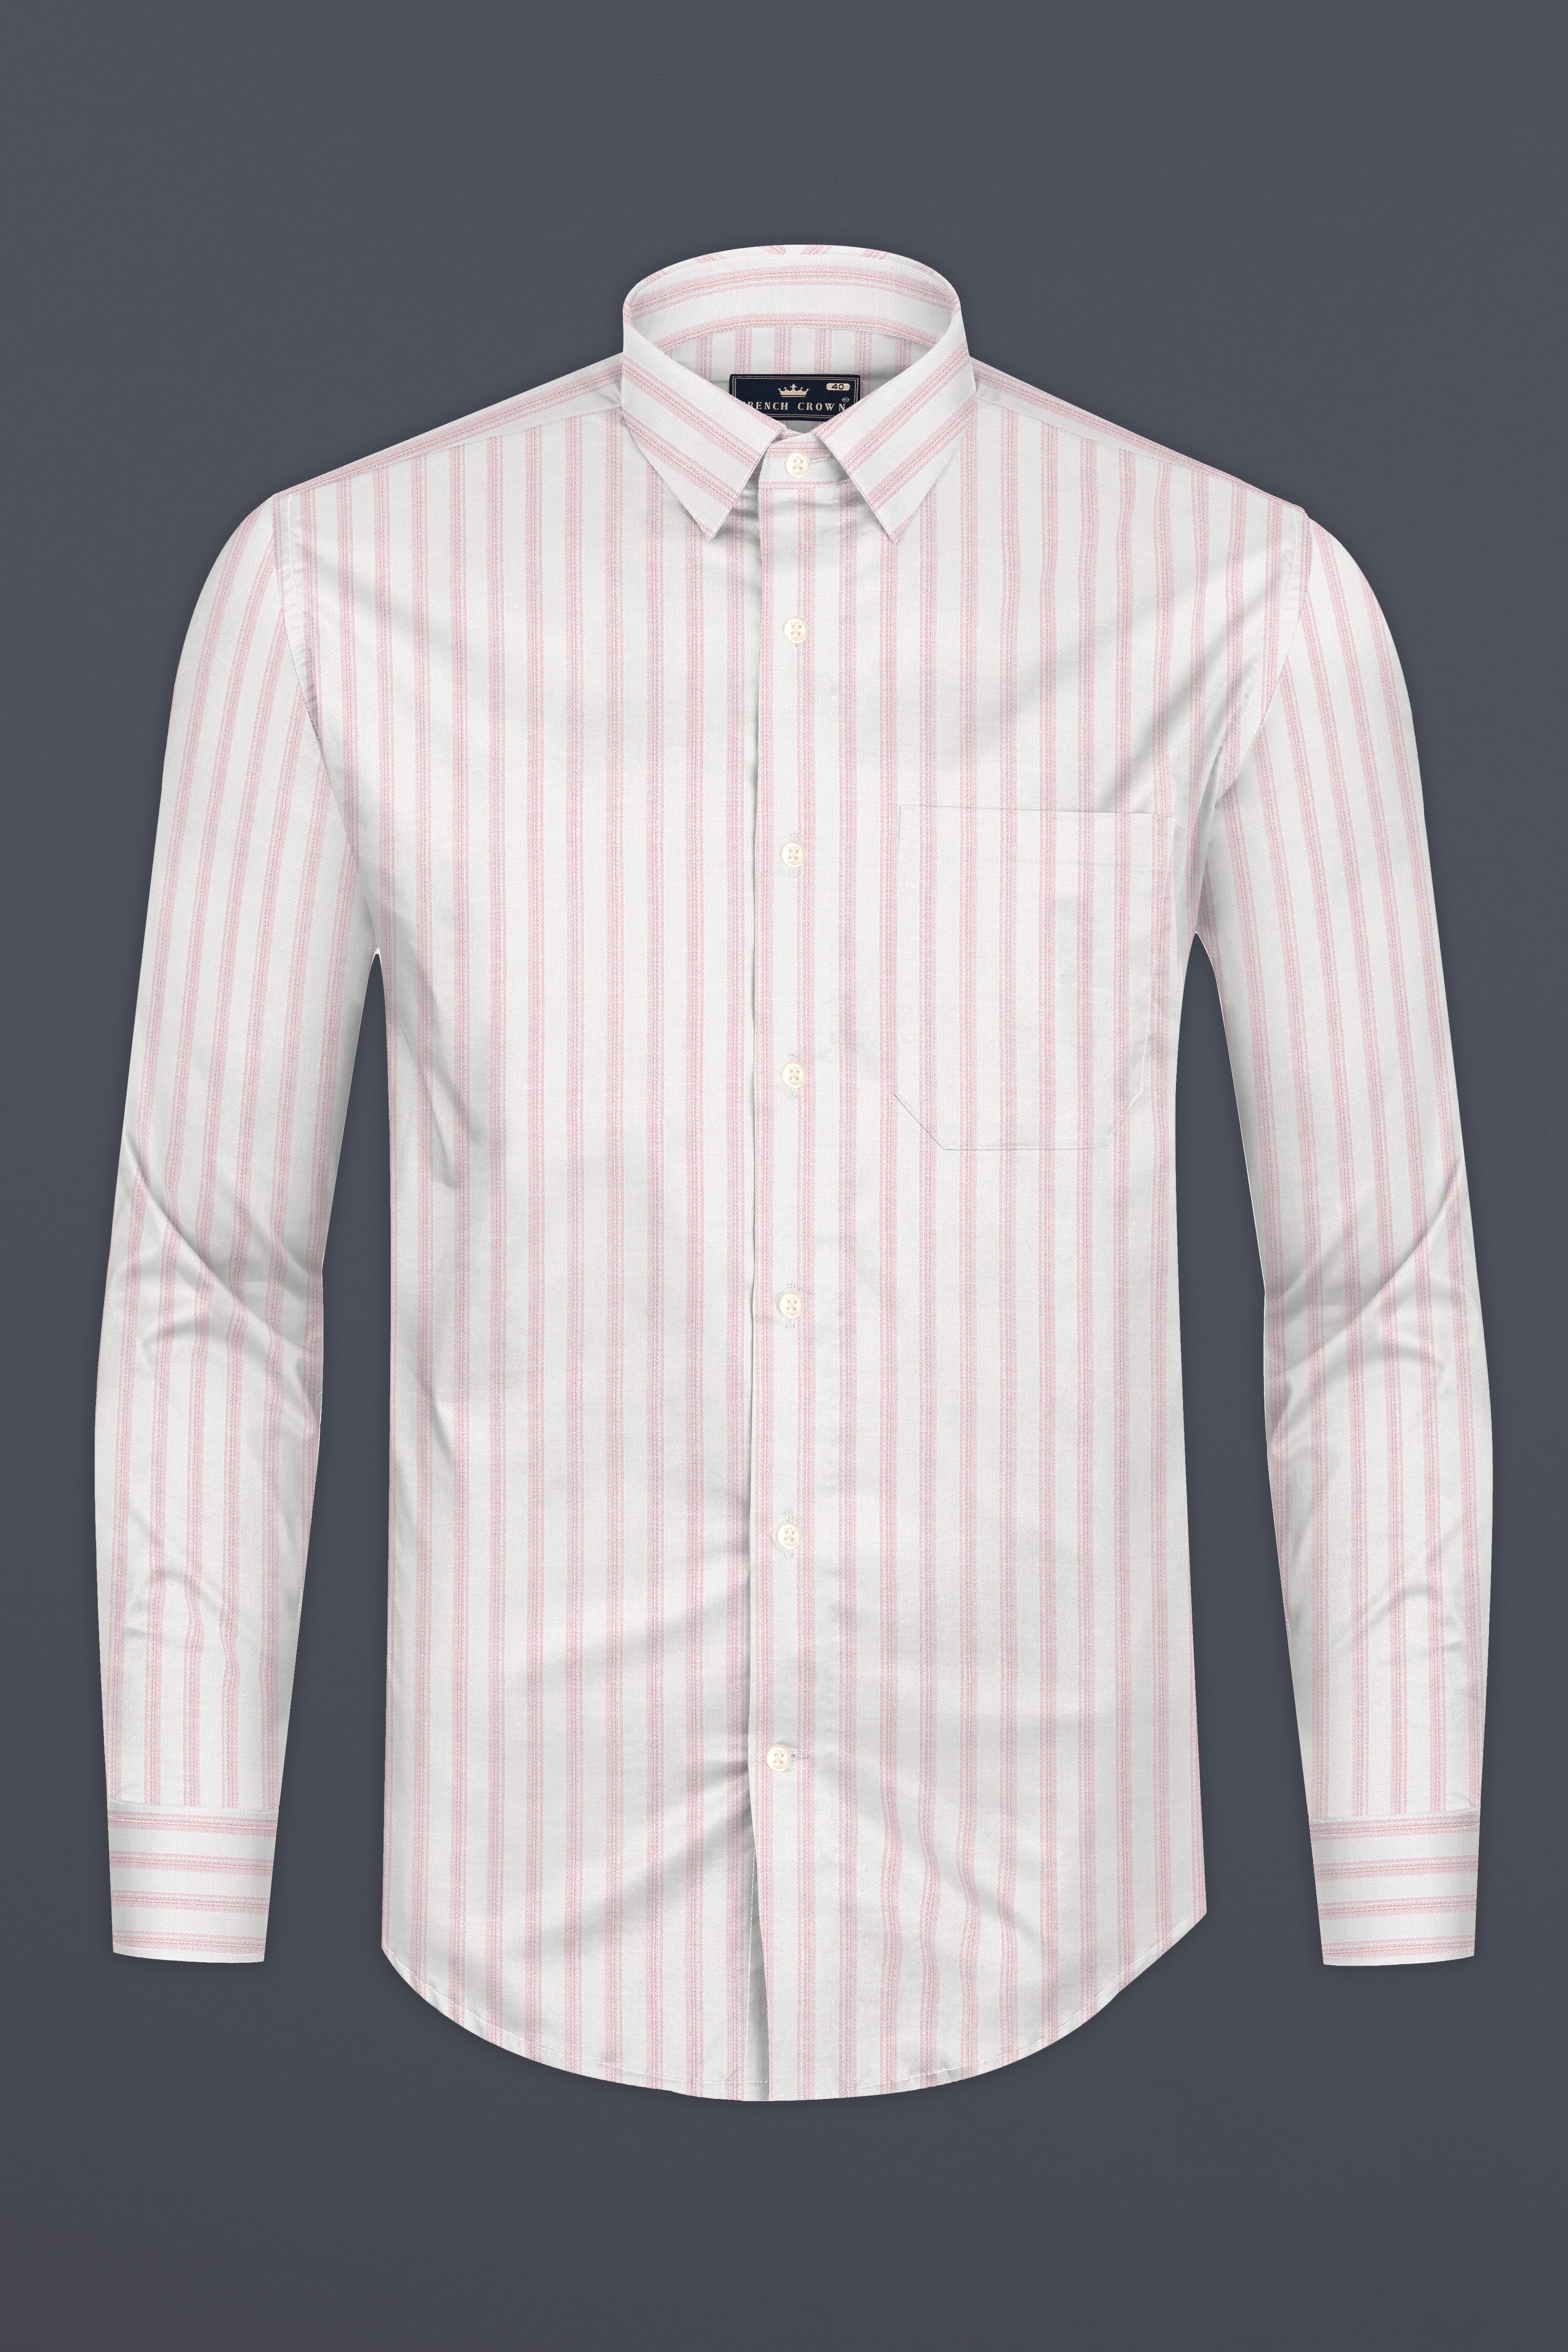 Bright White with Thistle Pink Striped Dobby Textured Premium Cotton Shirt